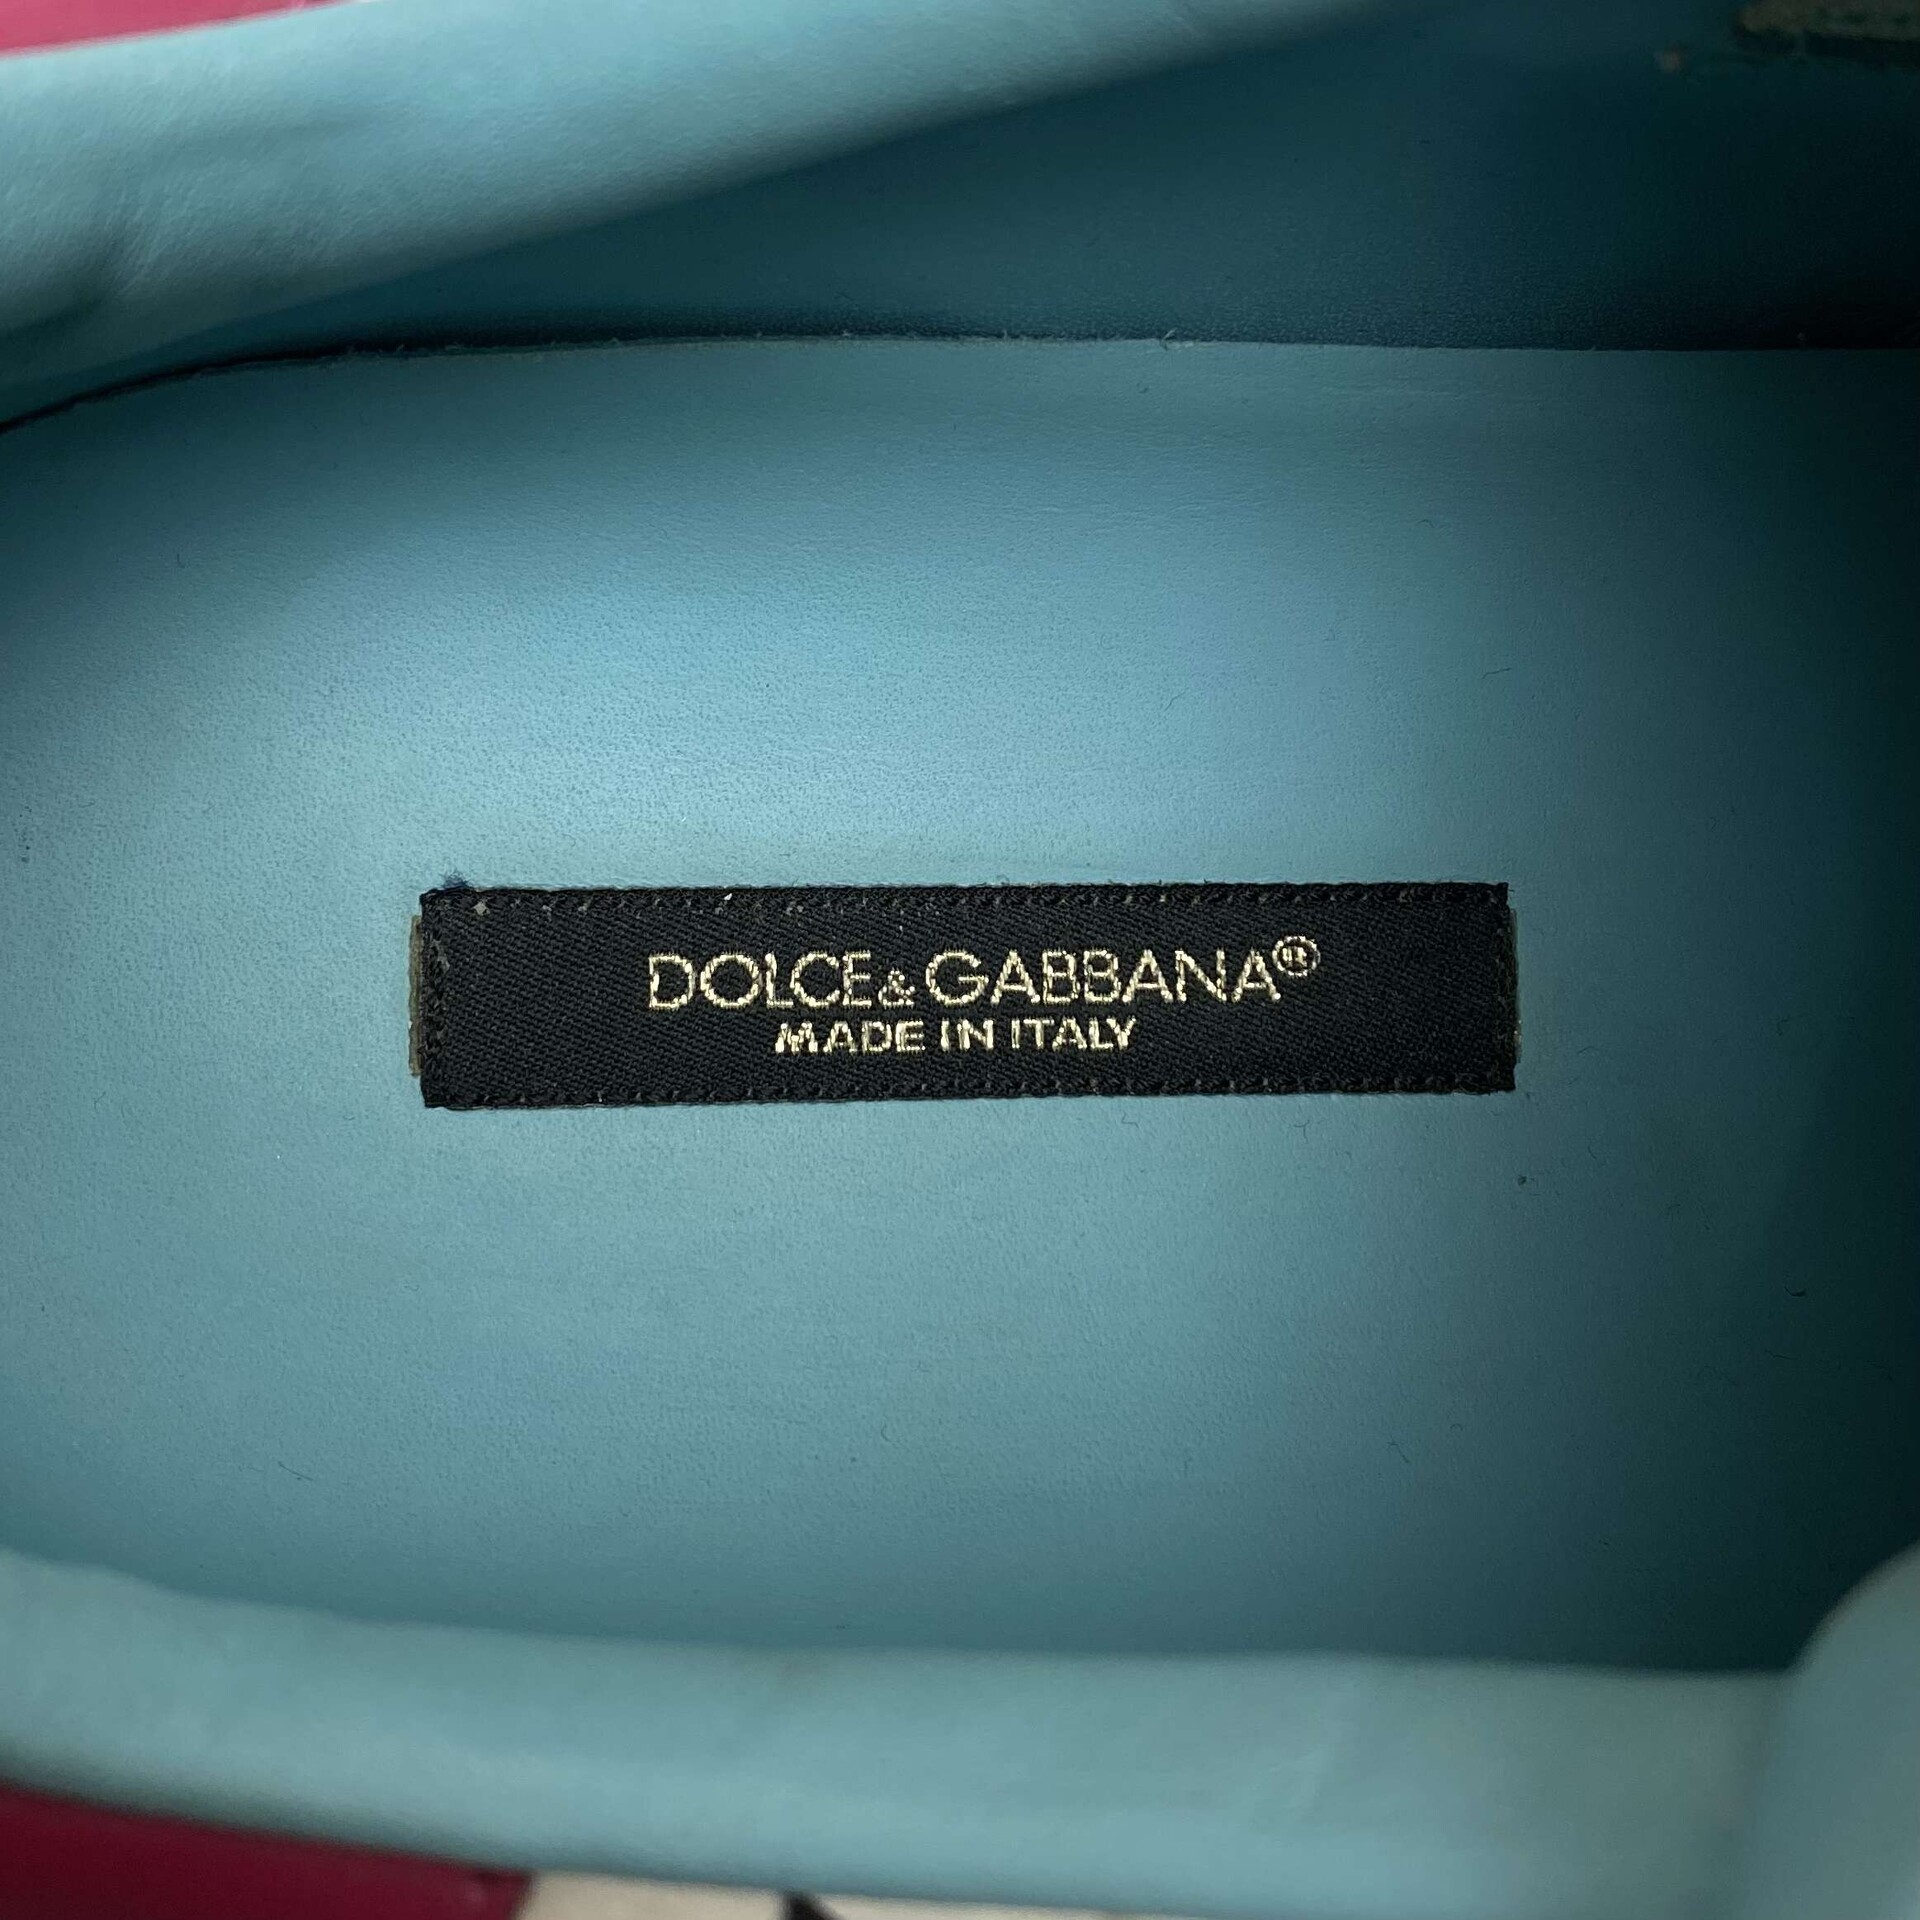 Tênis Dolce & Gabbana Portofino